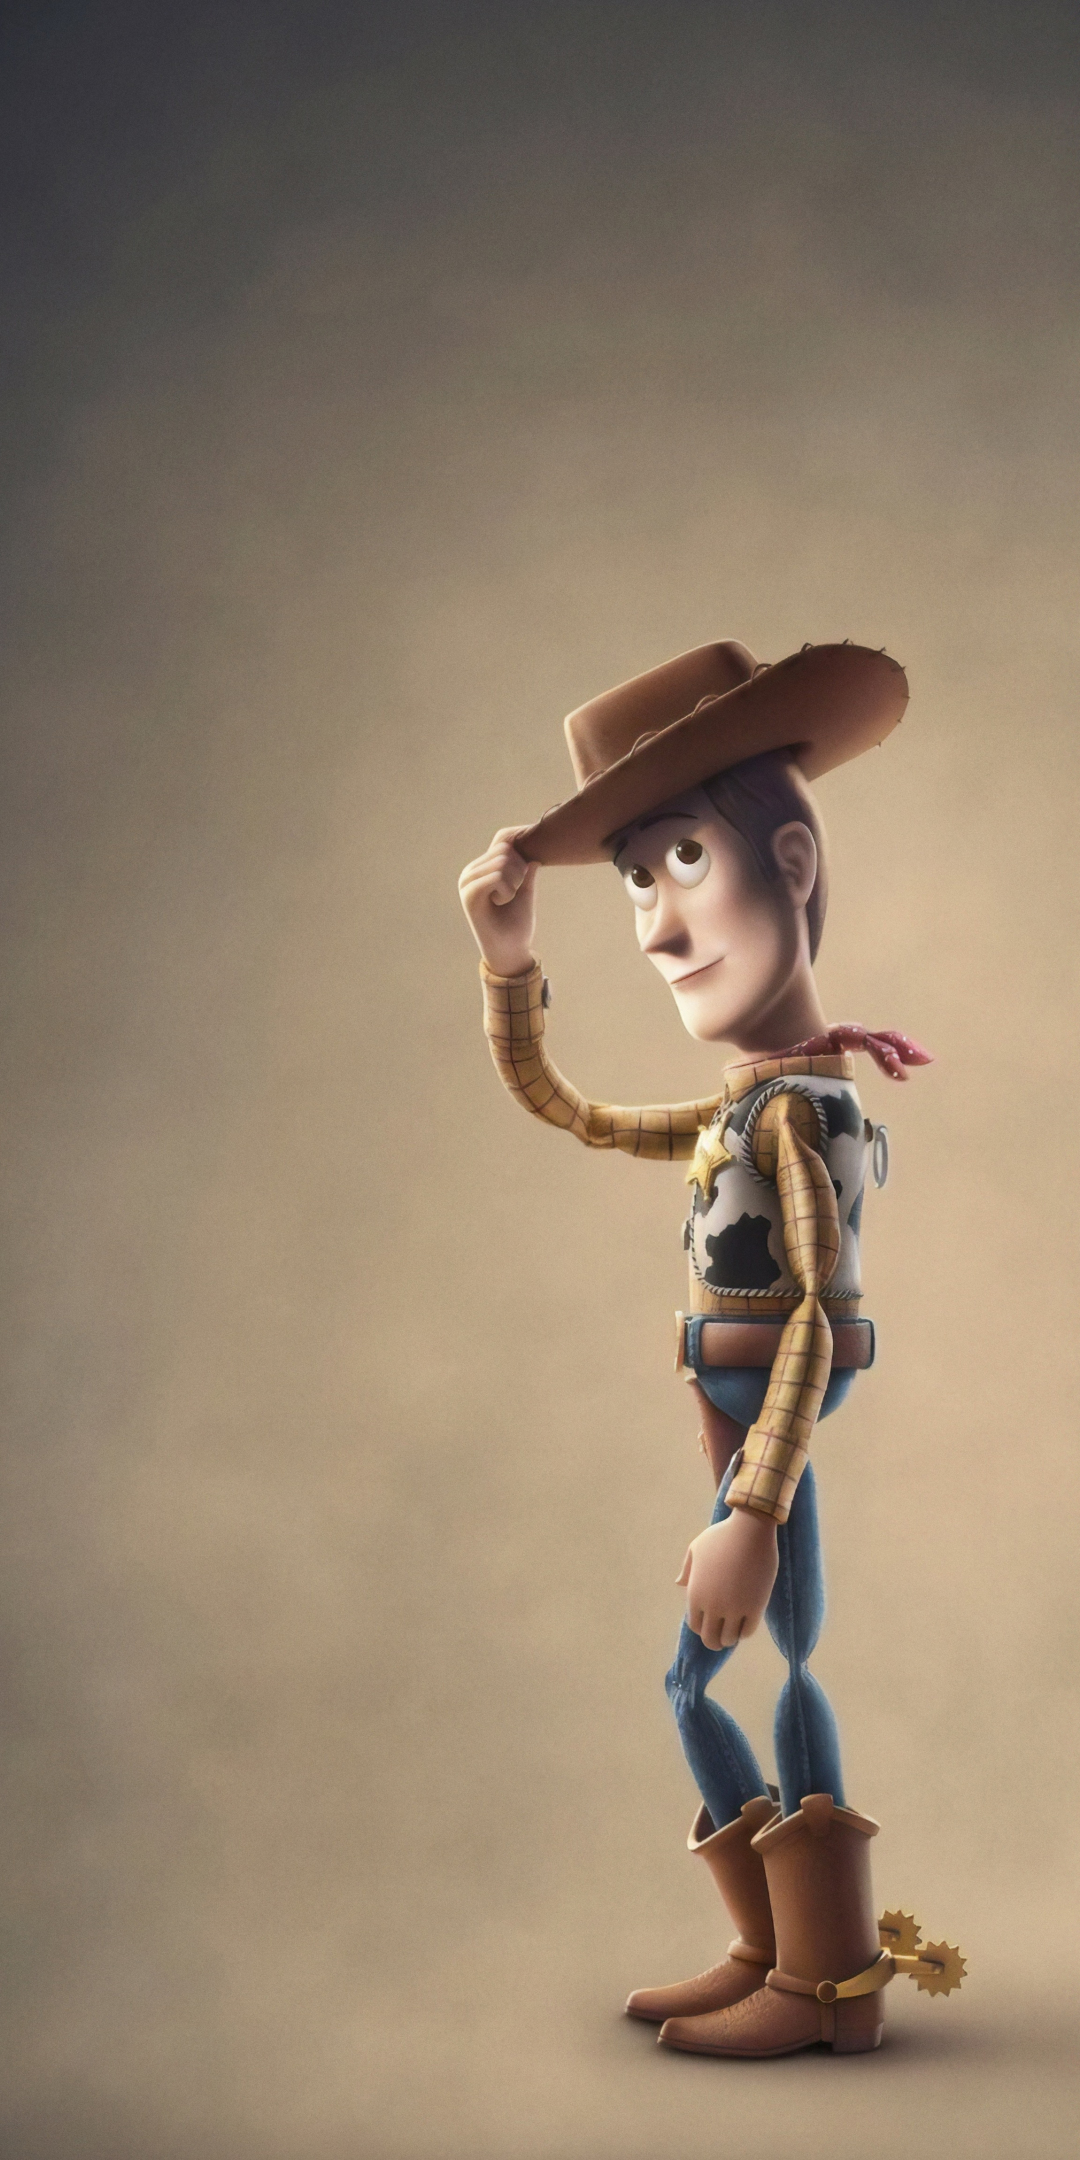 Toy story 4, Woody, animation movie, pixar, 1080x2160 wallpaper